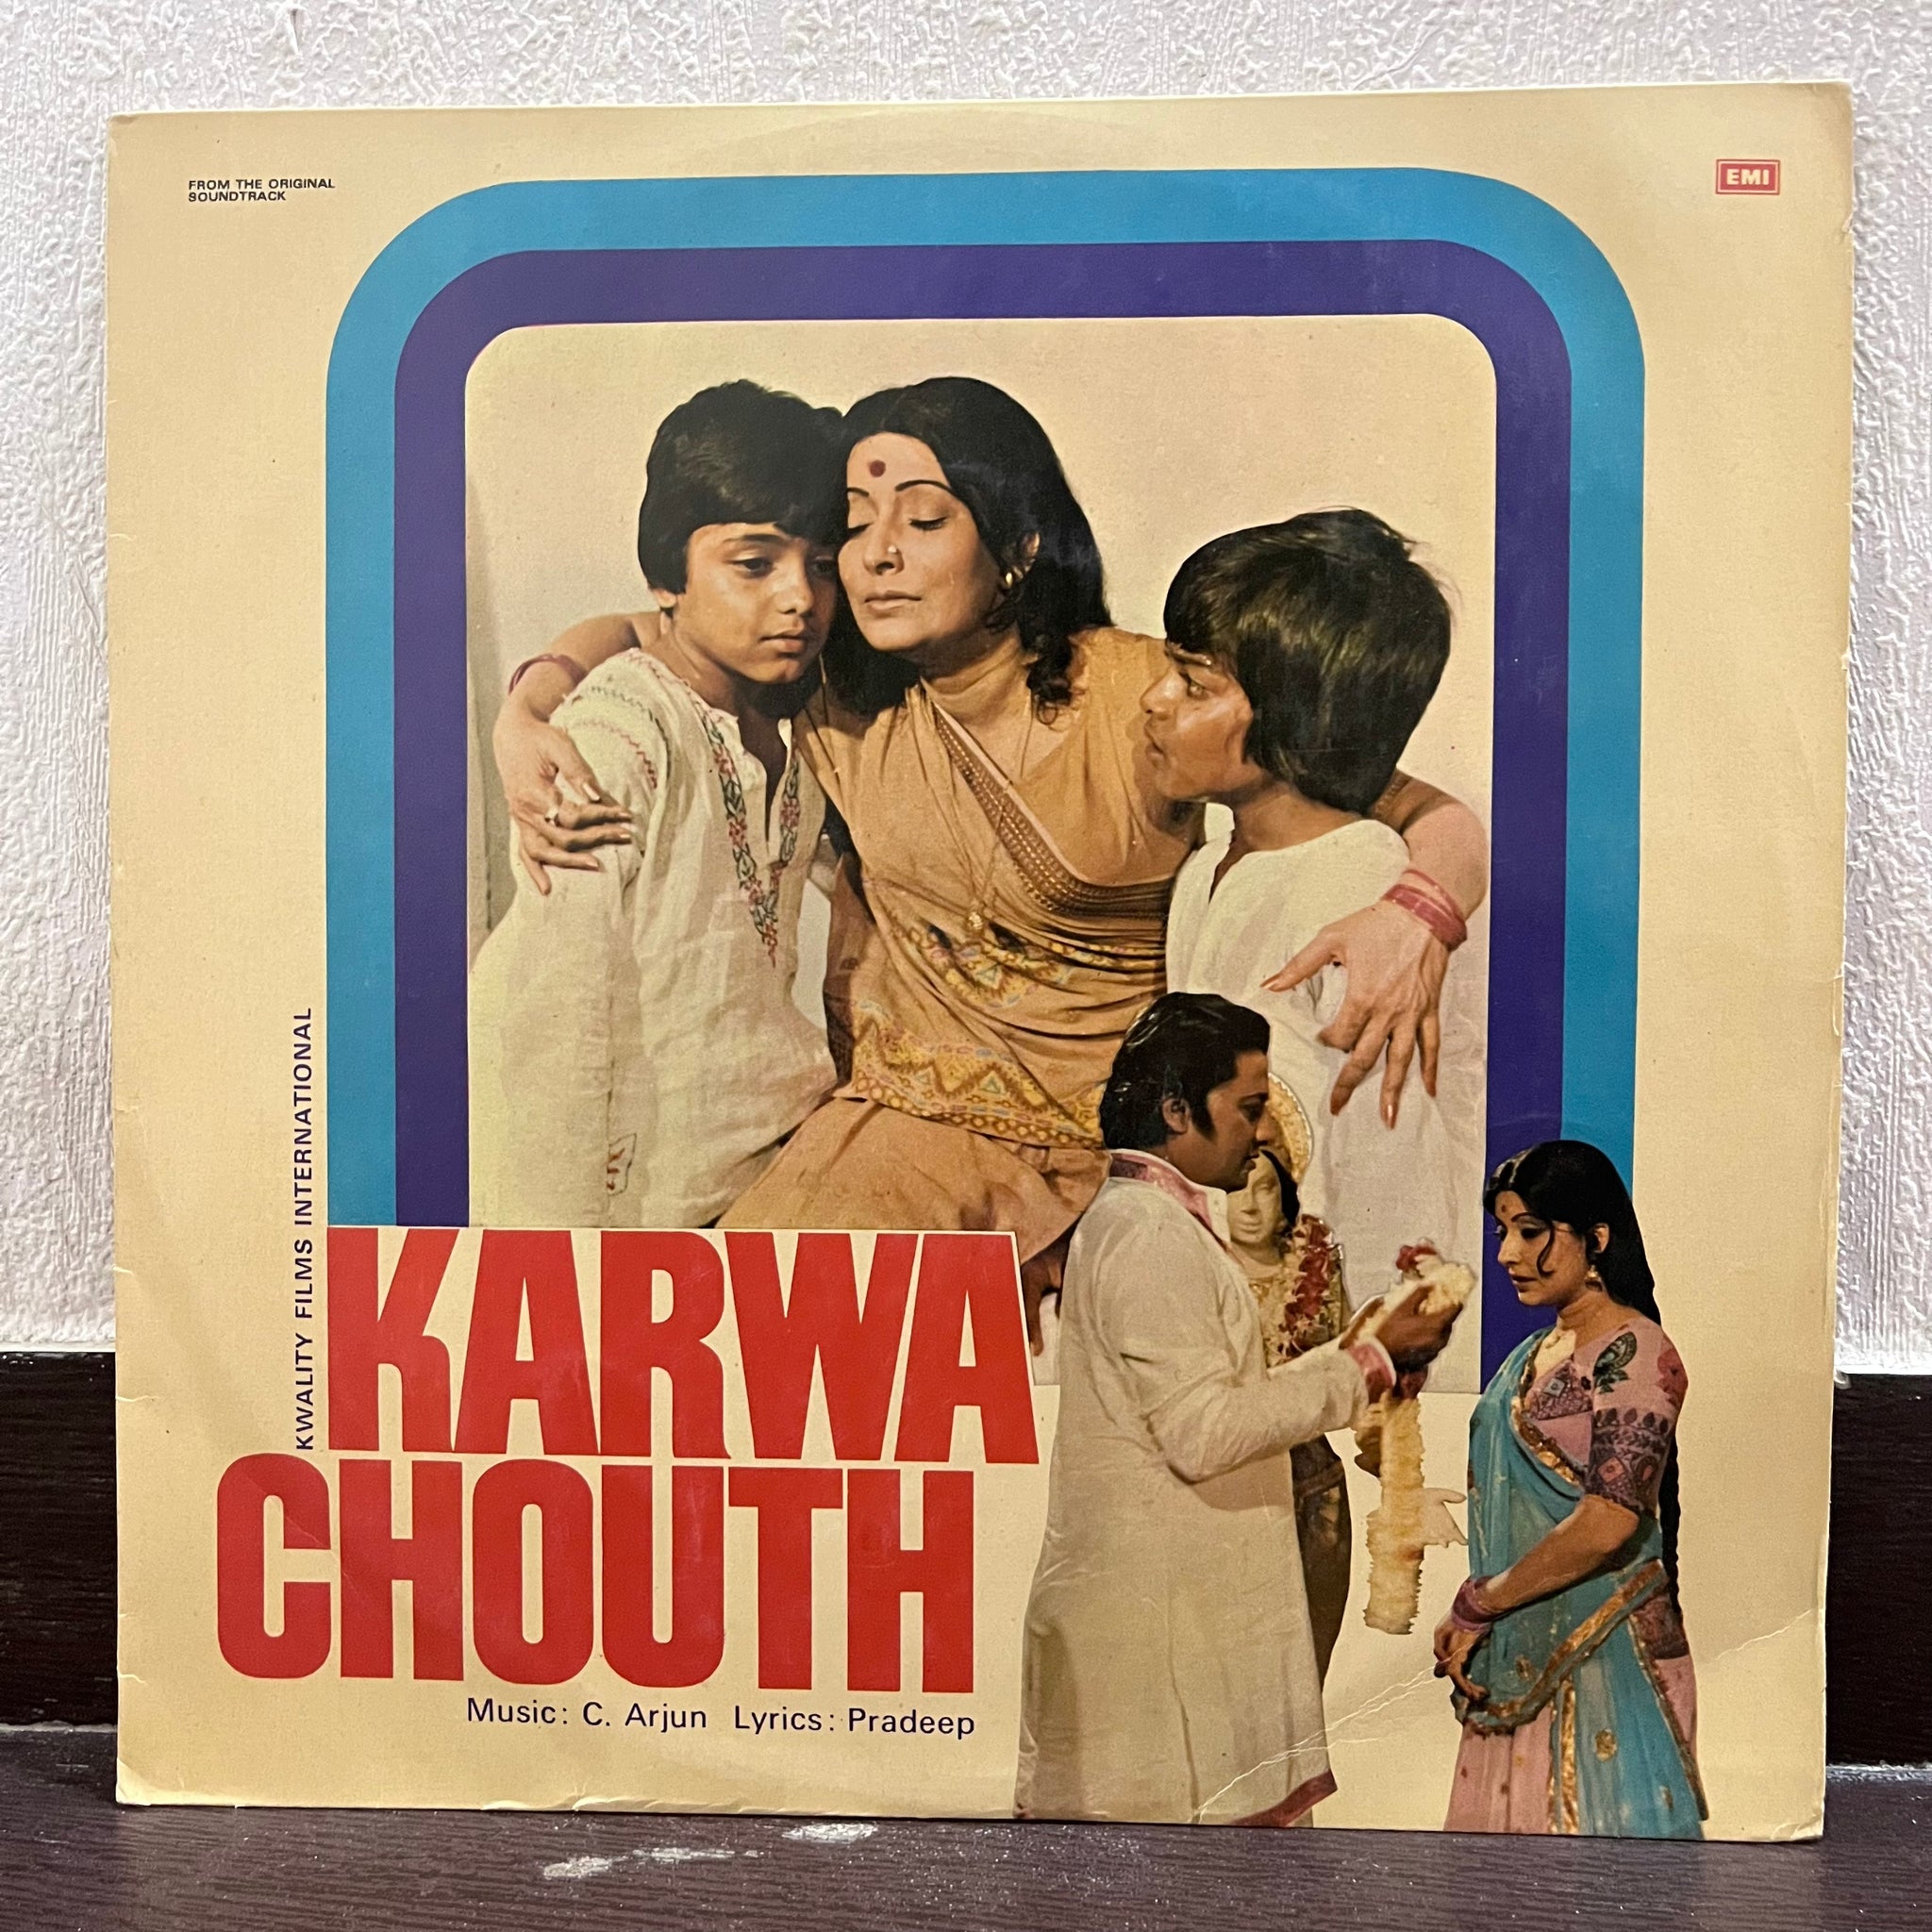 Karwa chouth By C.arjun,Pradeep